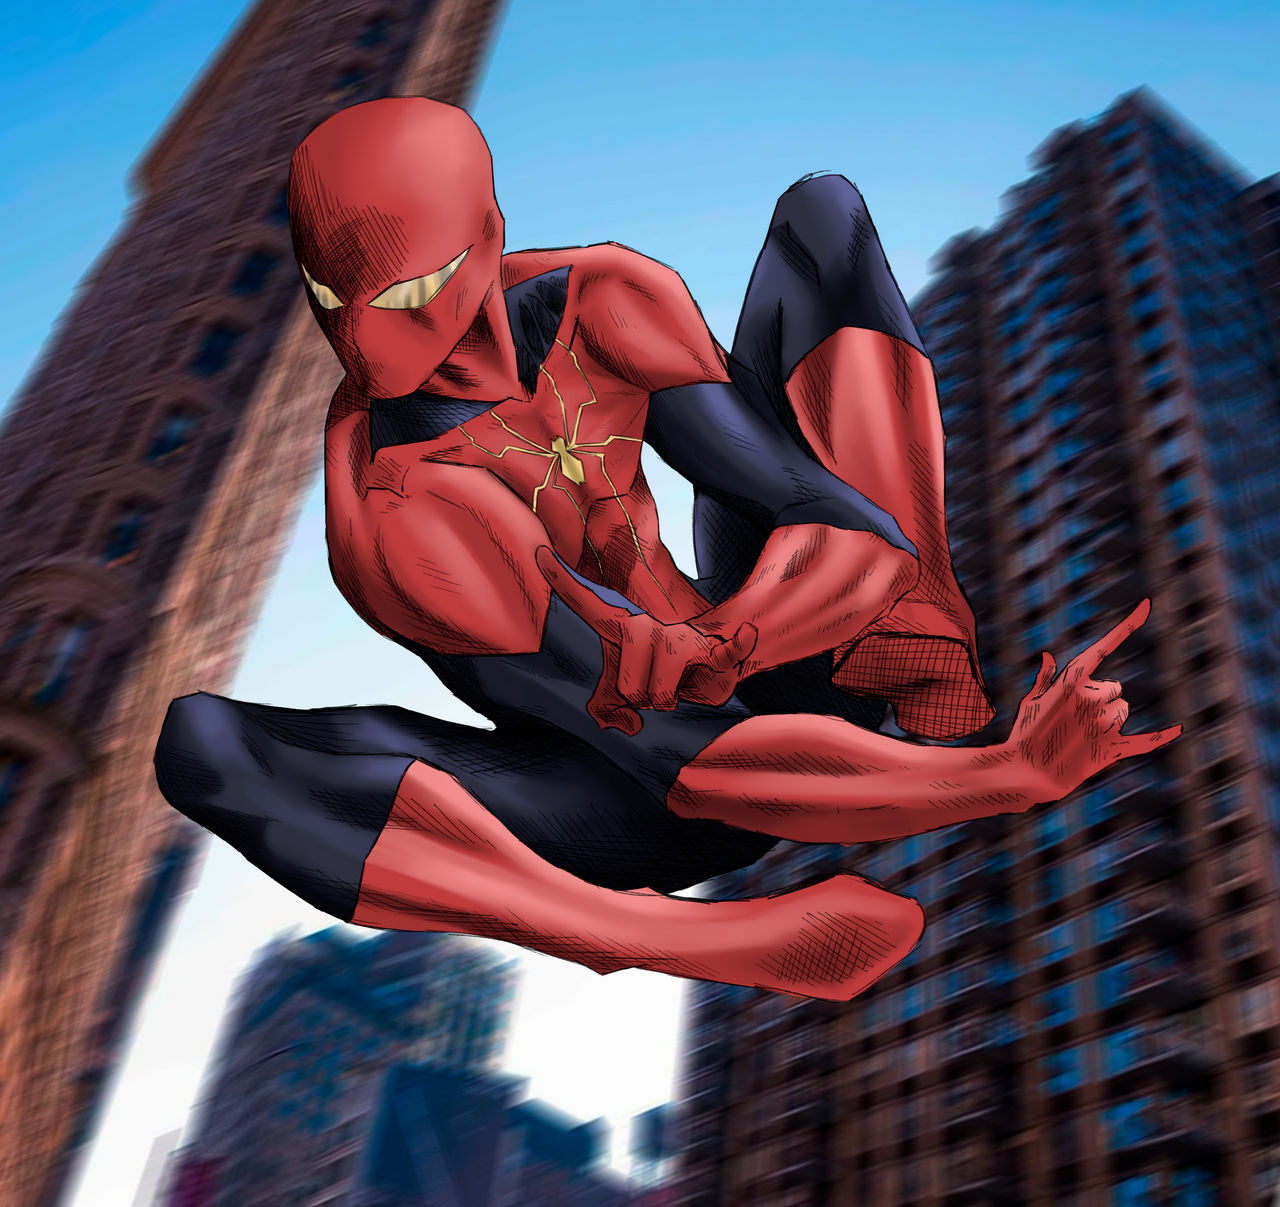 Spiderman custom suit by Vice2202 on DeviantArt